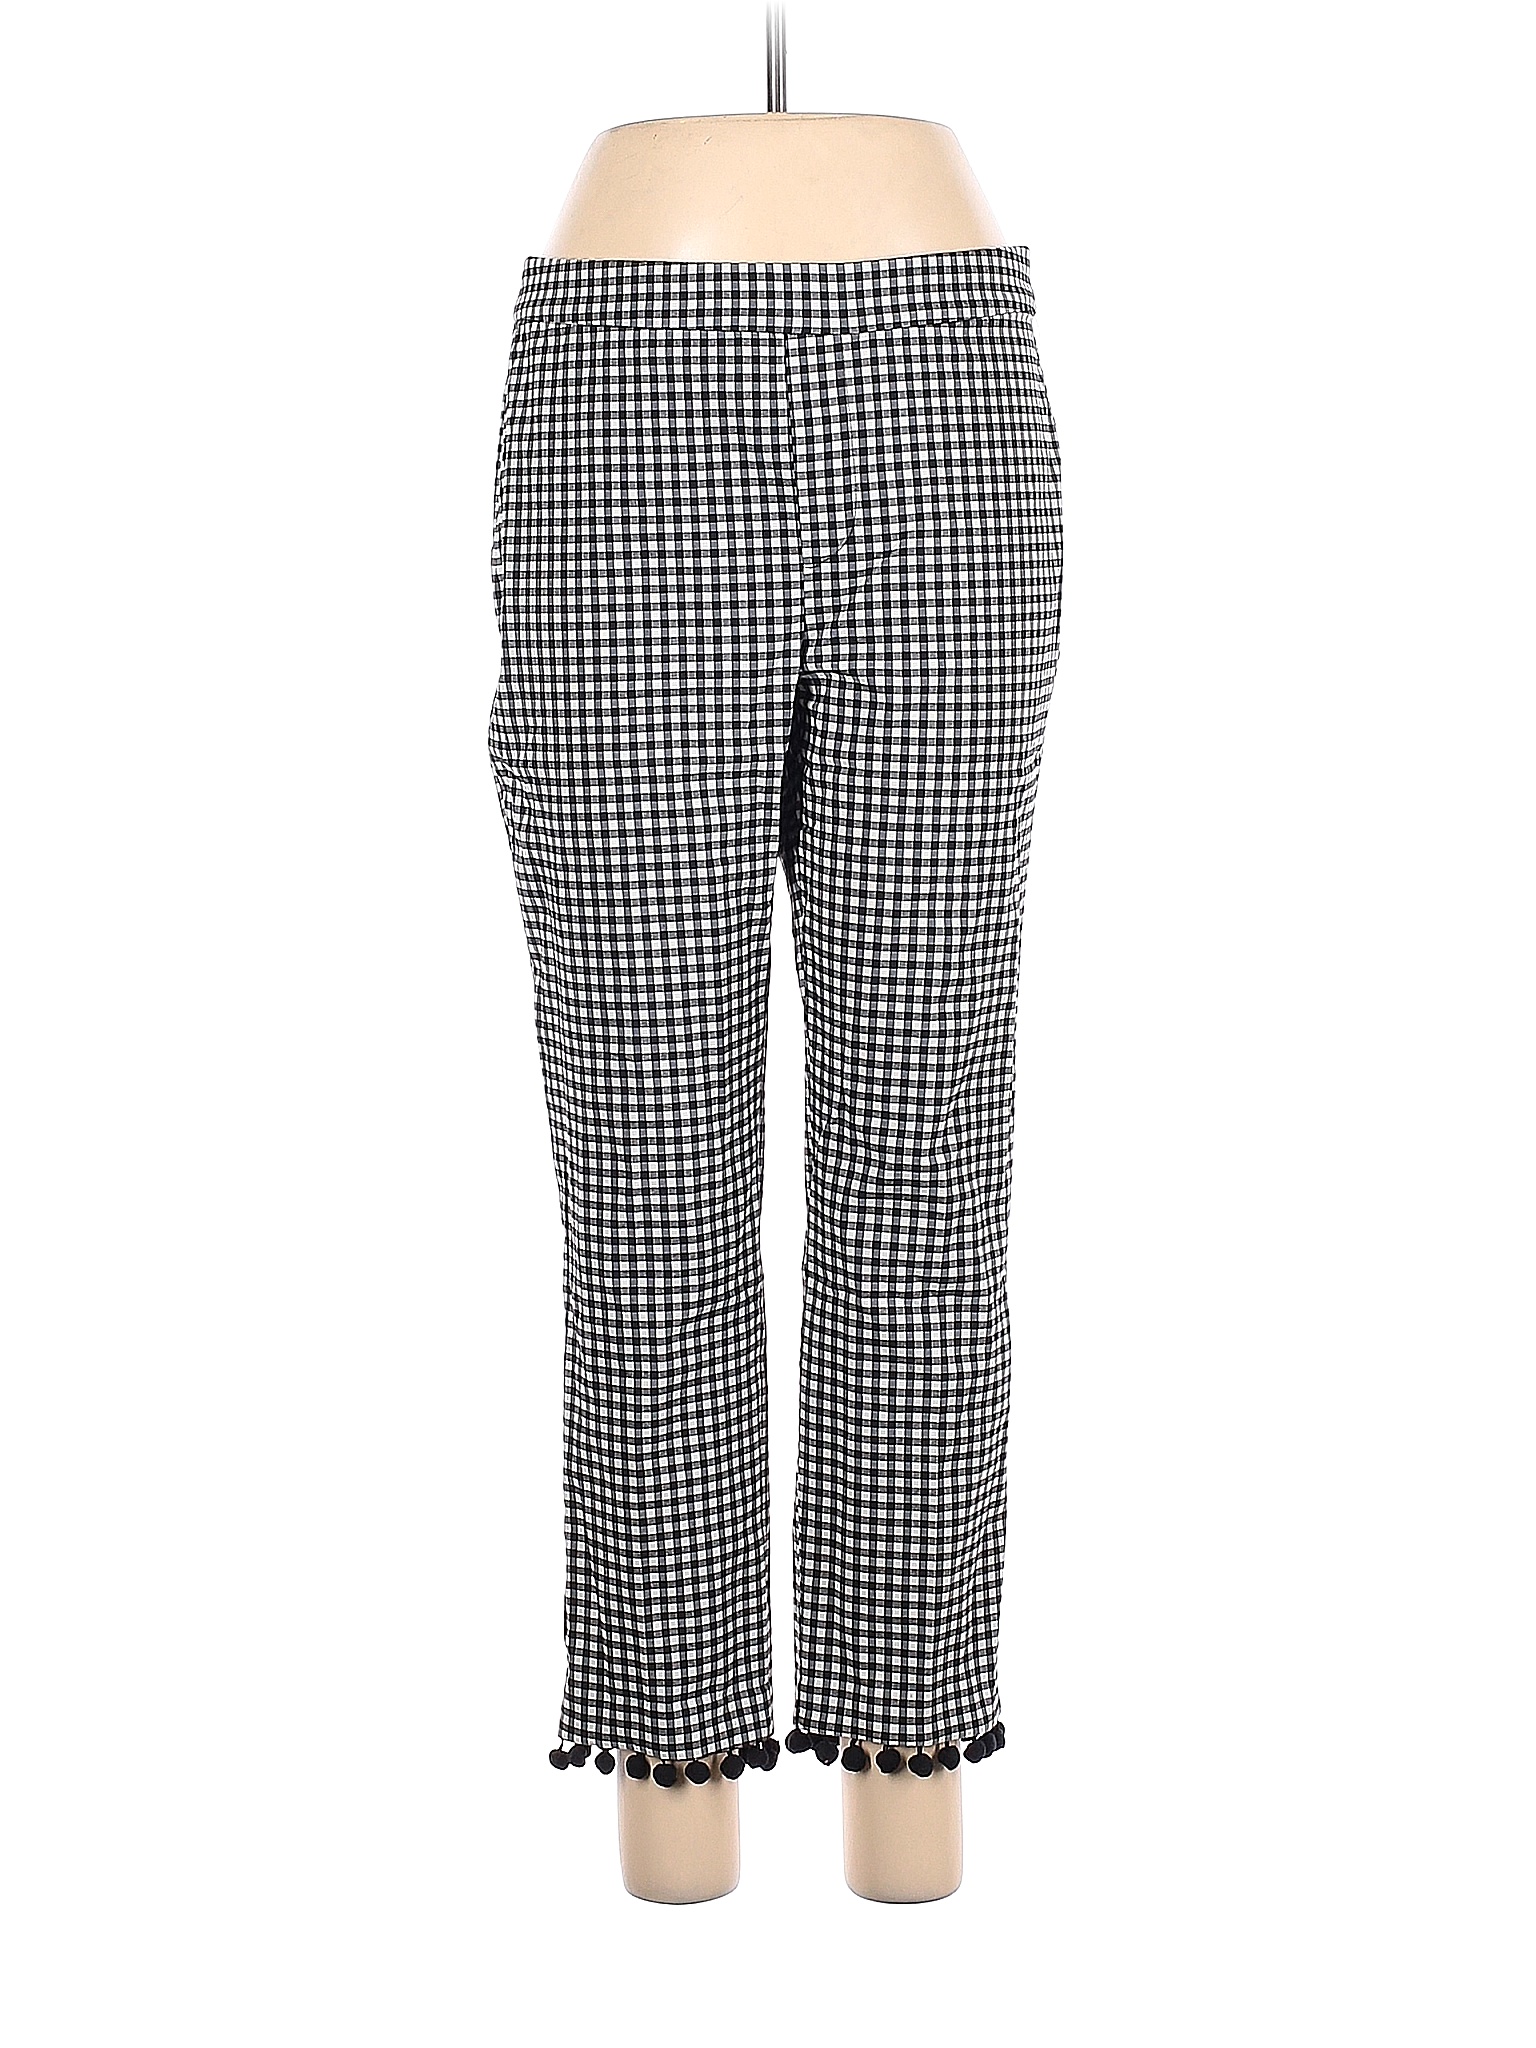 Roz & Ali Checkered-gingham Multi Color White Dress Pants Size 10 - 75% ...